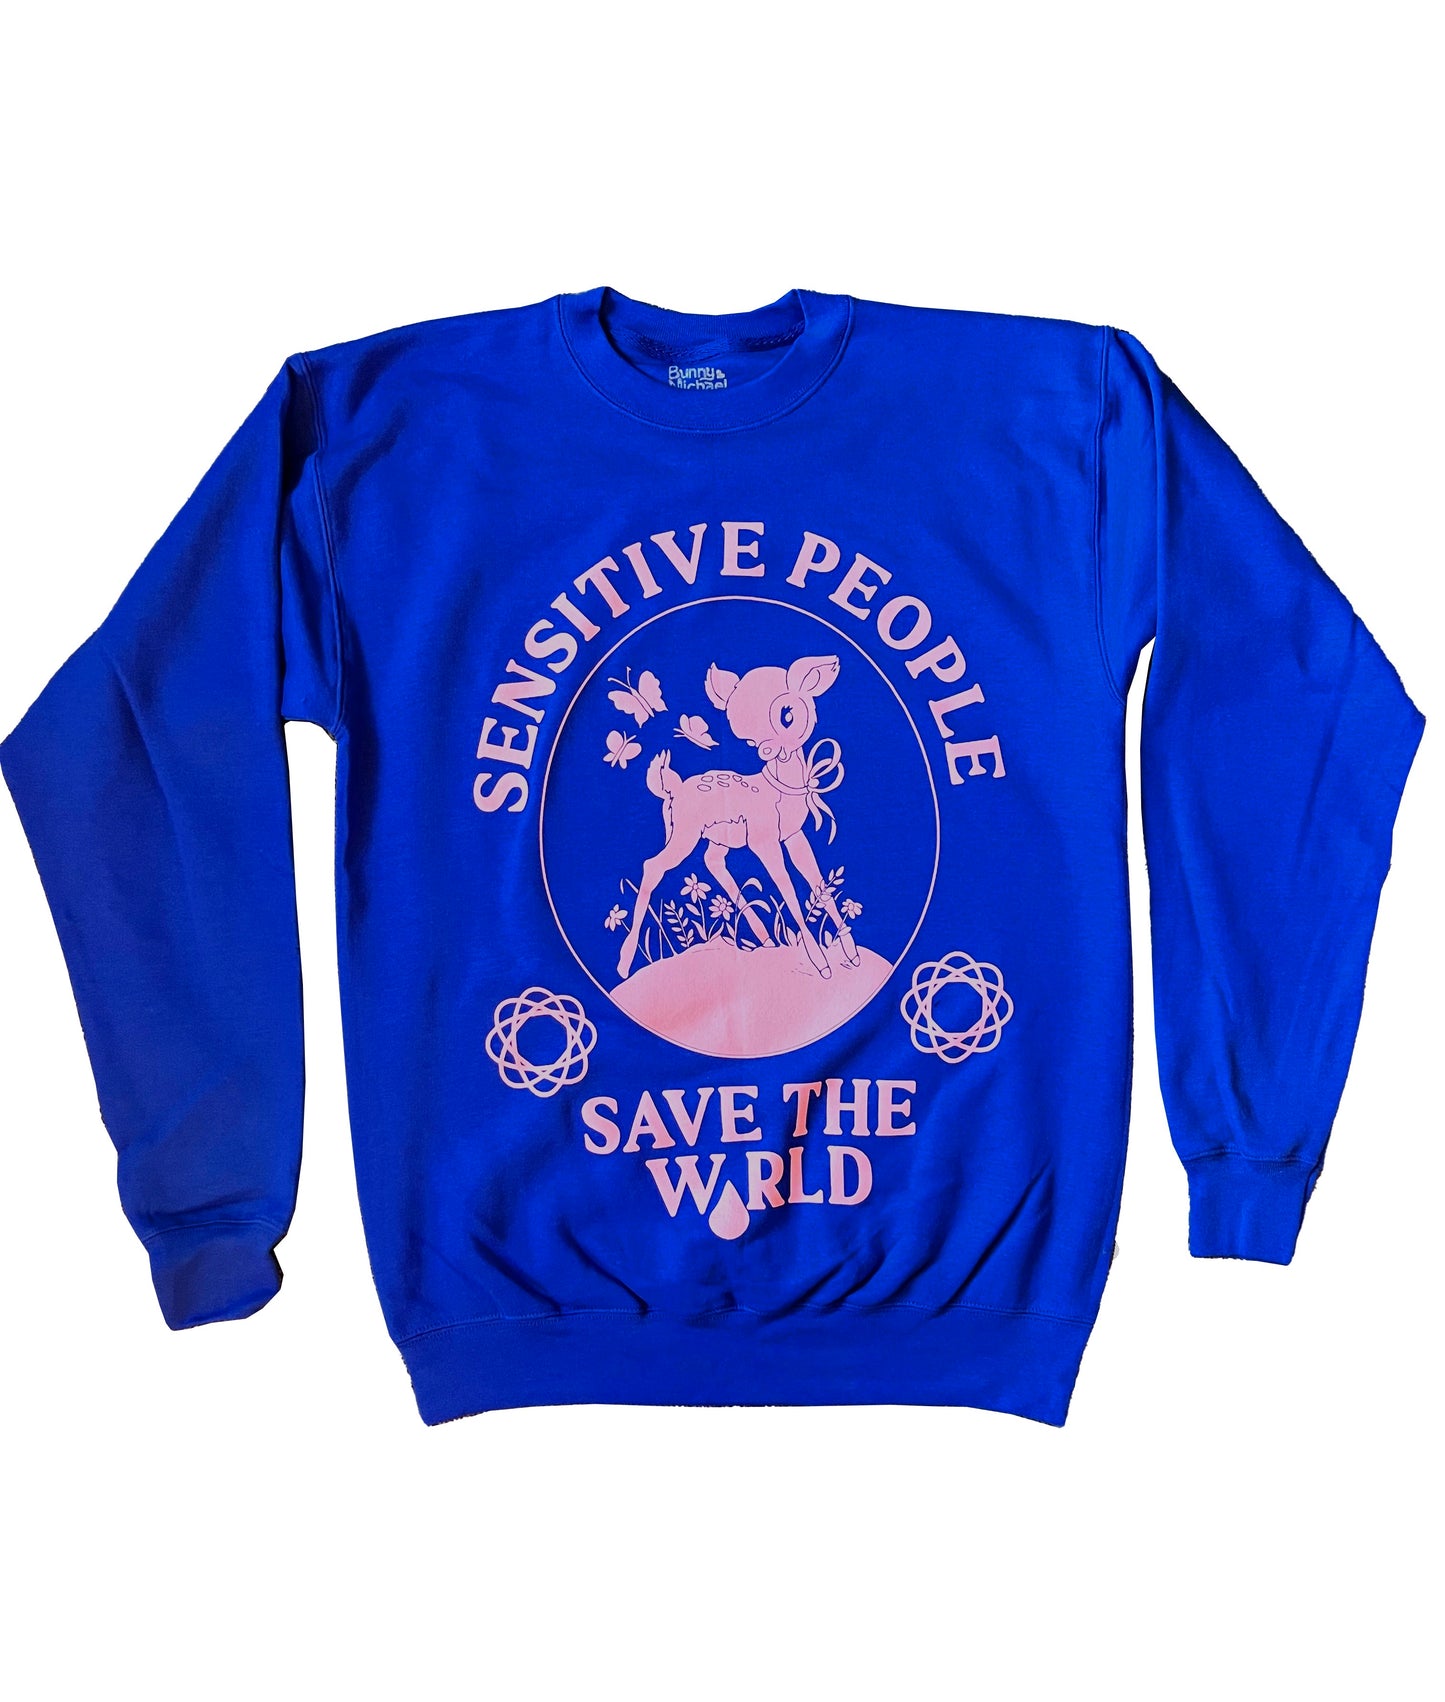 Sensitive People Save The World Sweatshirt